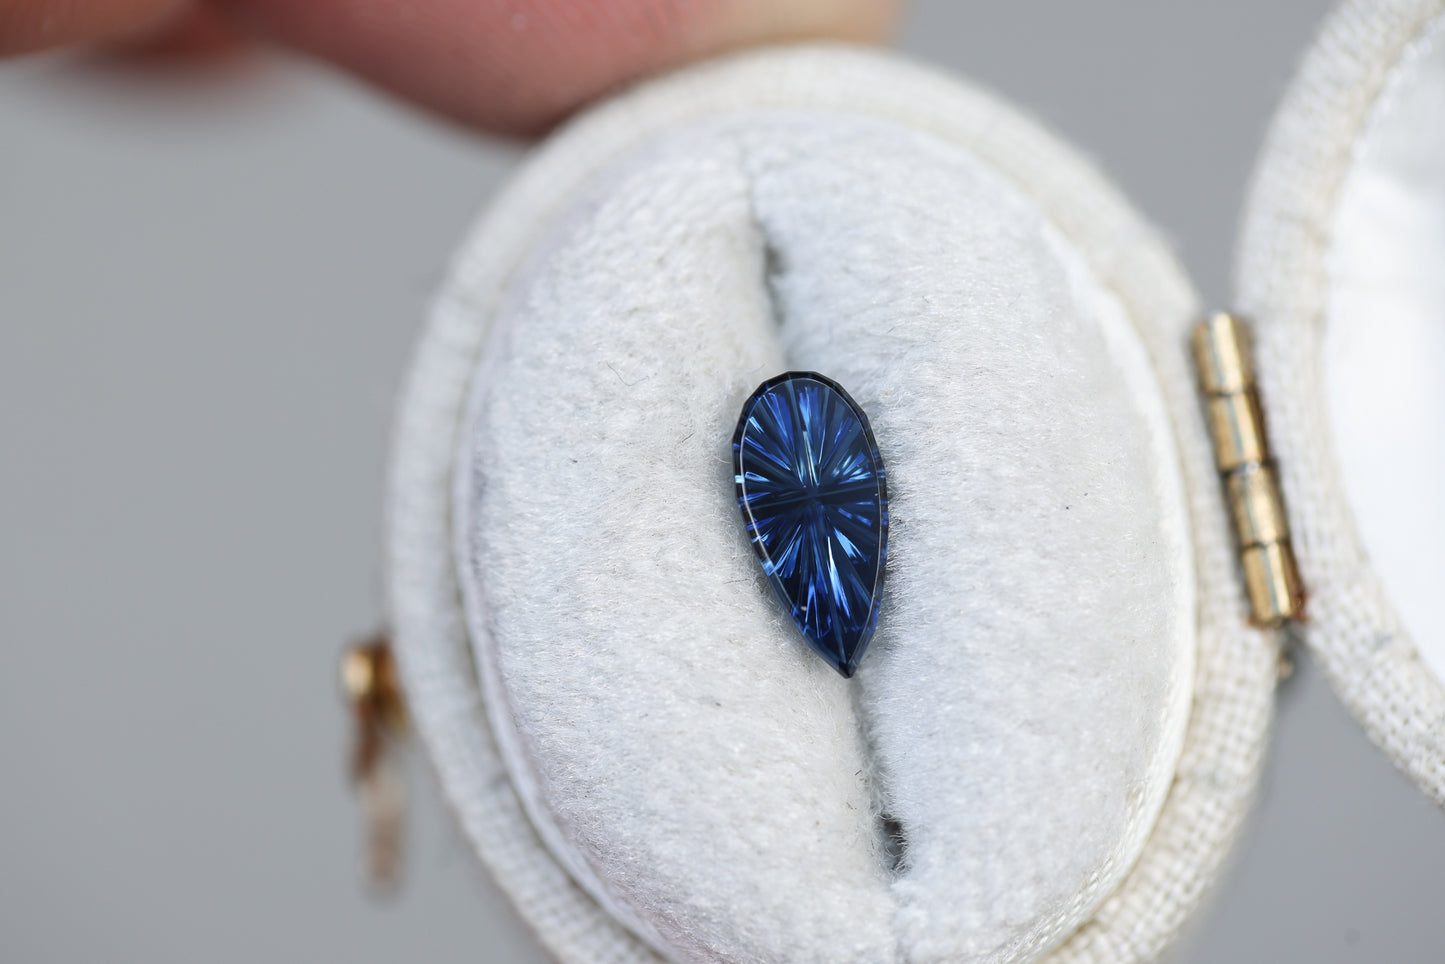 .78ct pear blue sapphire - Starbrite cut by John Dyer